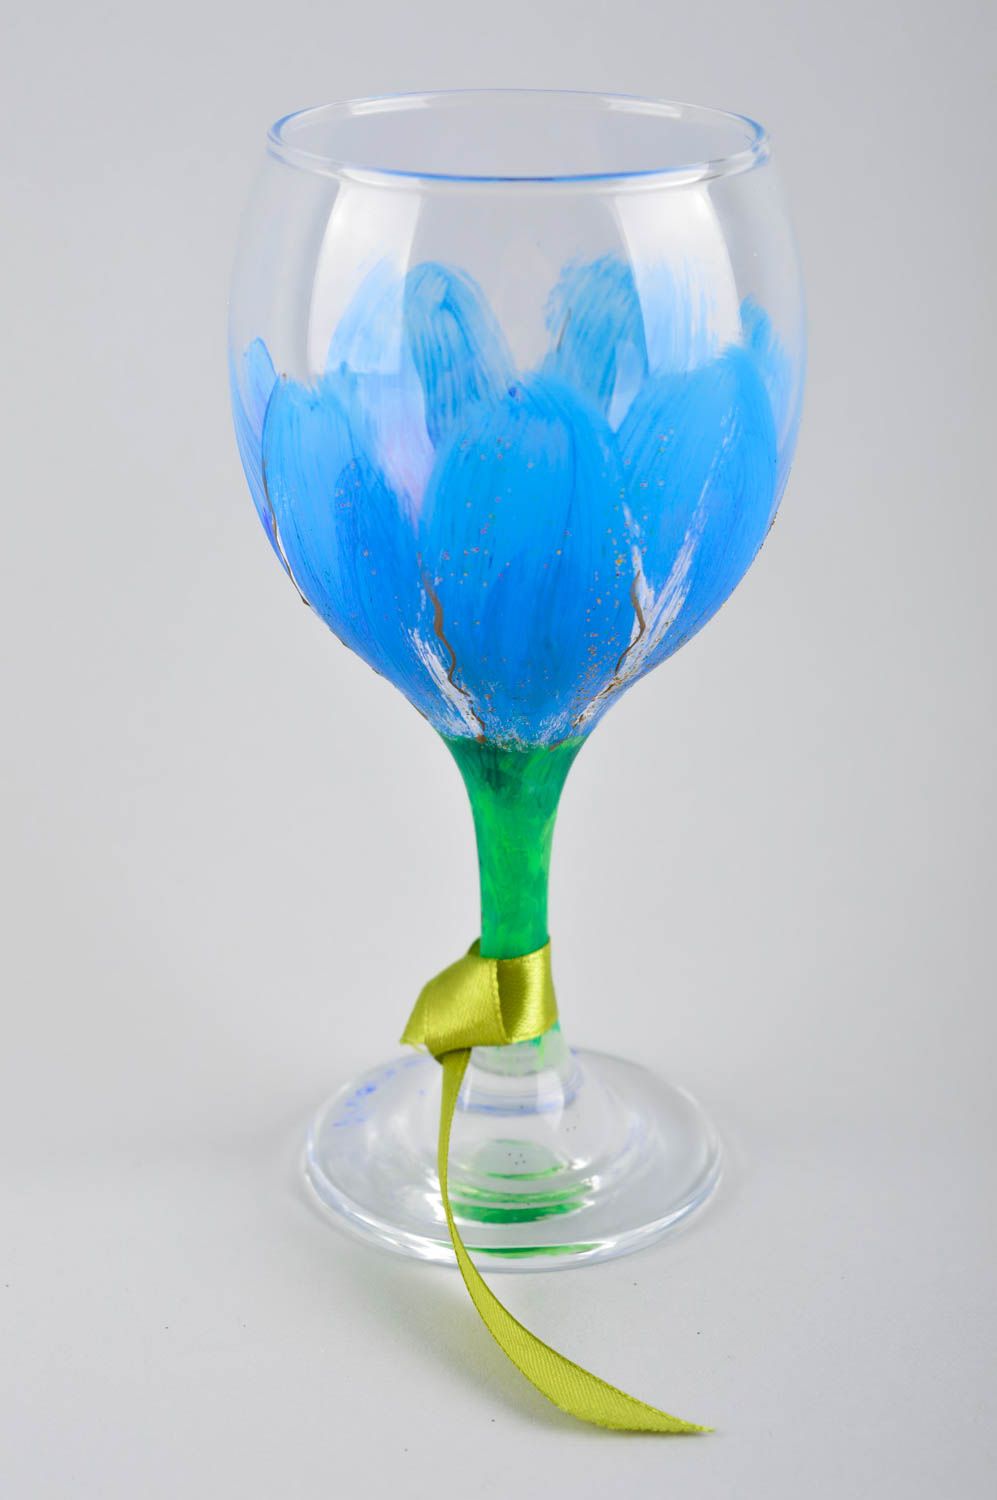 Stylish handmade glass ware painted wine glass stemware ideas small gifts photo 2